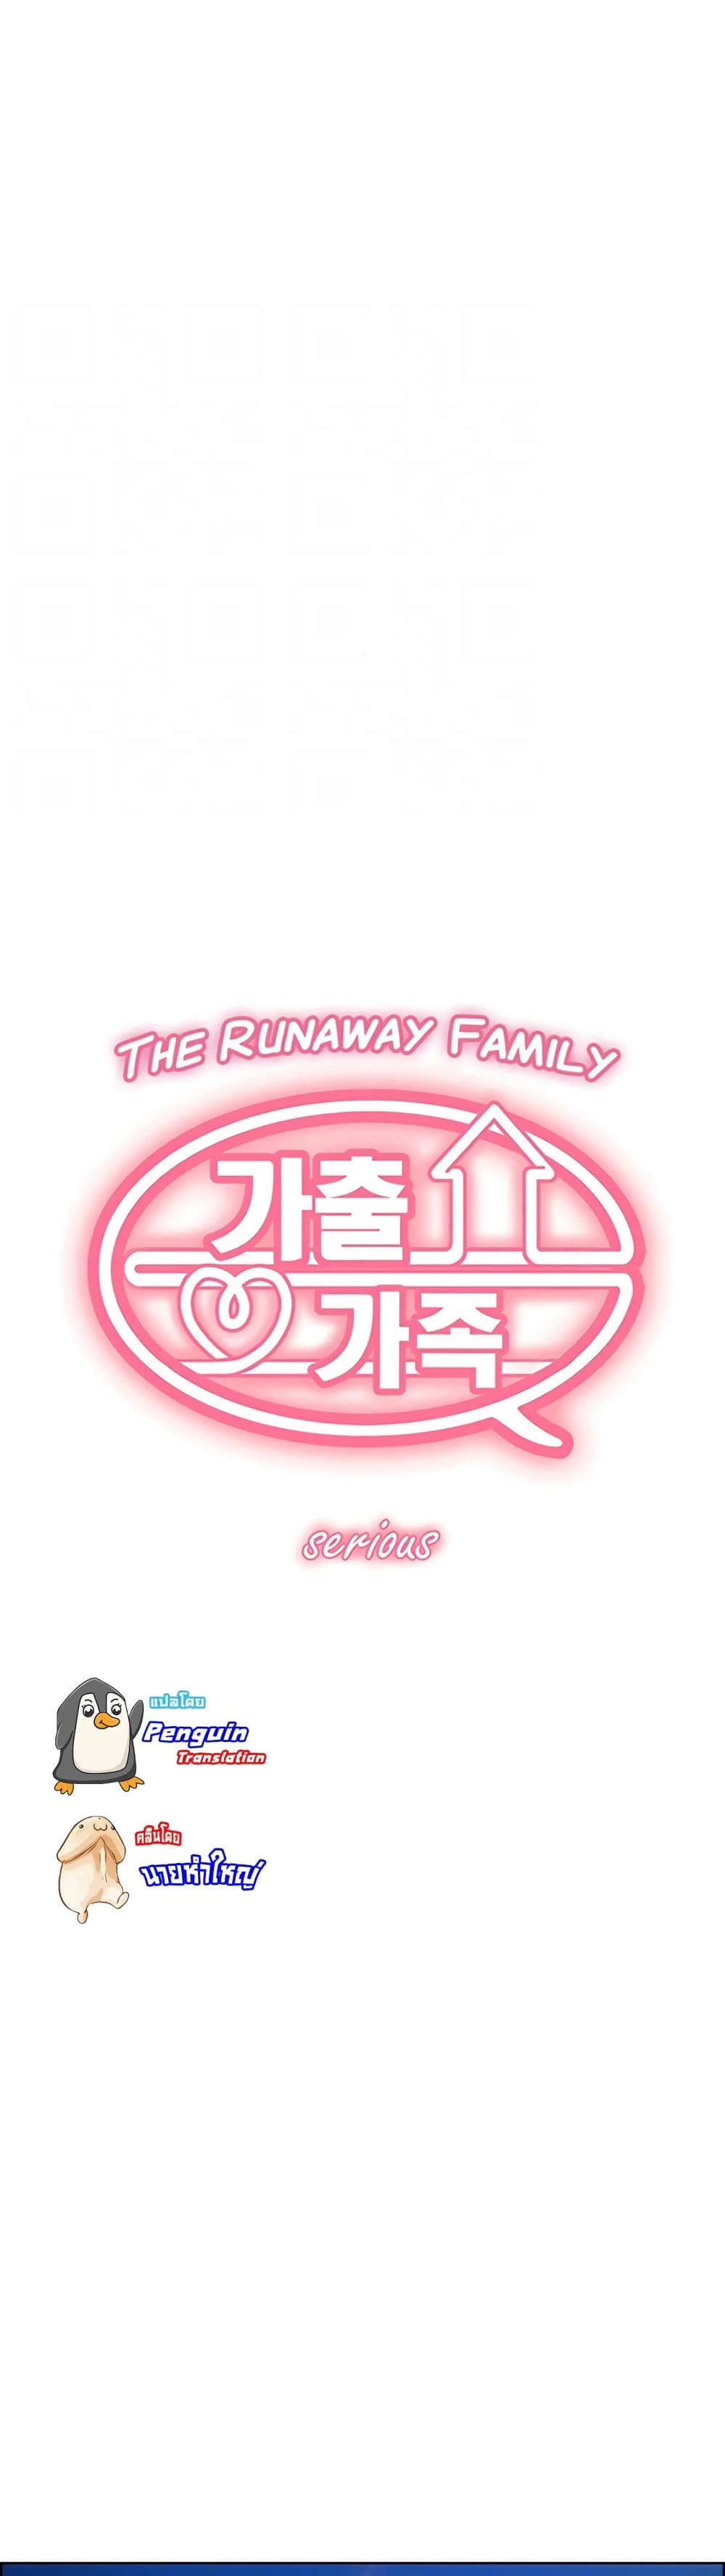 The Runaway Family 15 (1)